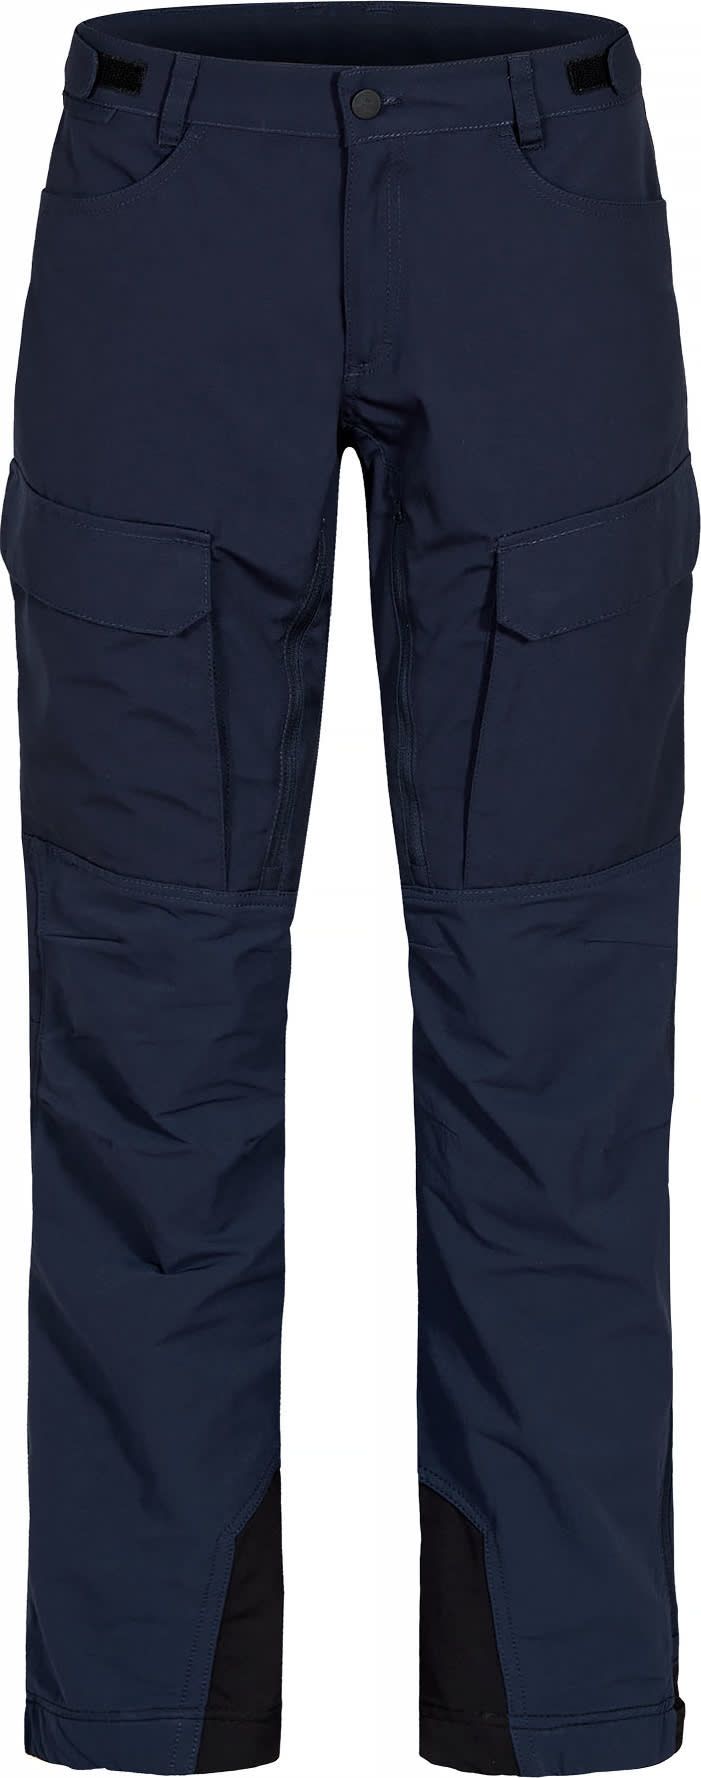 Women's Granheim Hiking Pants Navy blazer